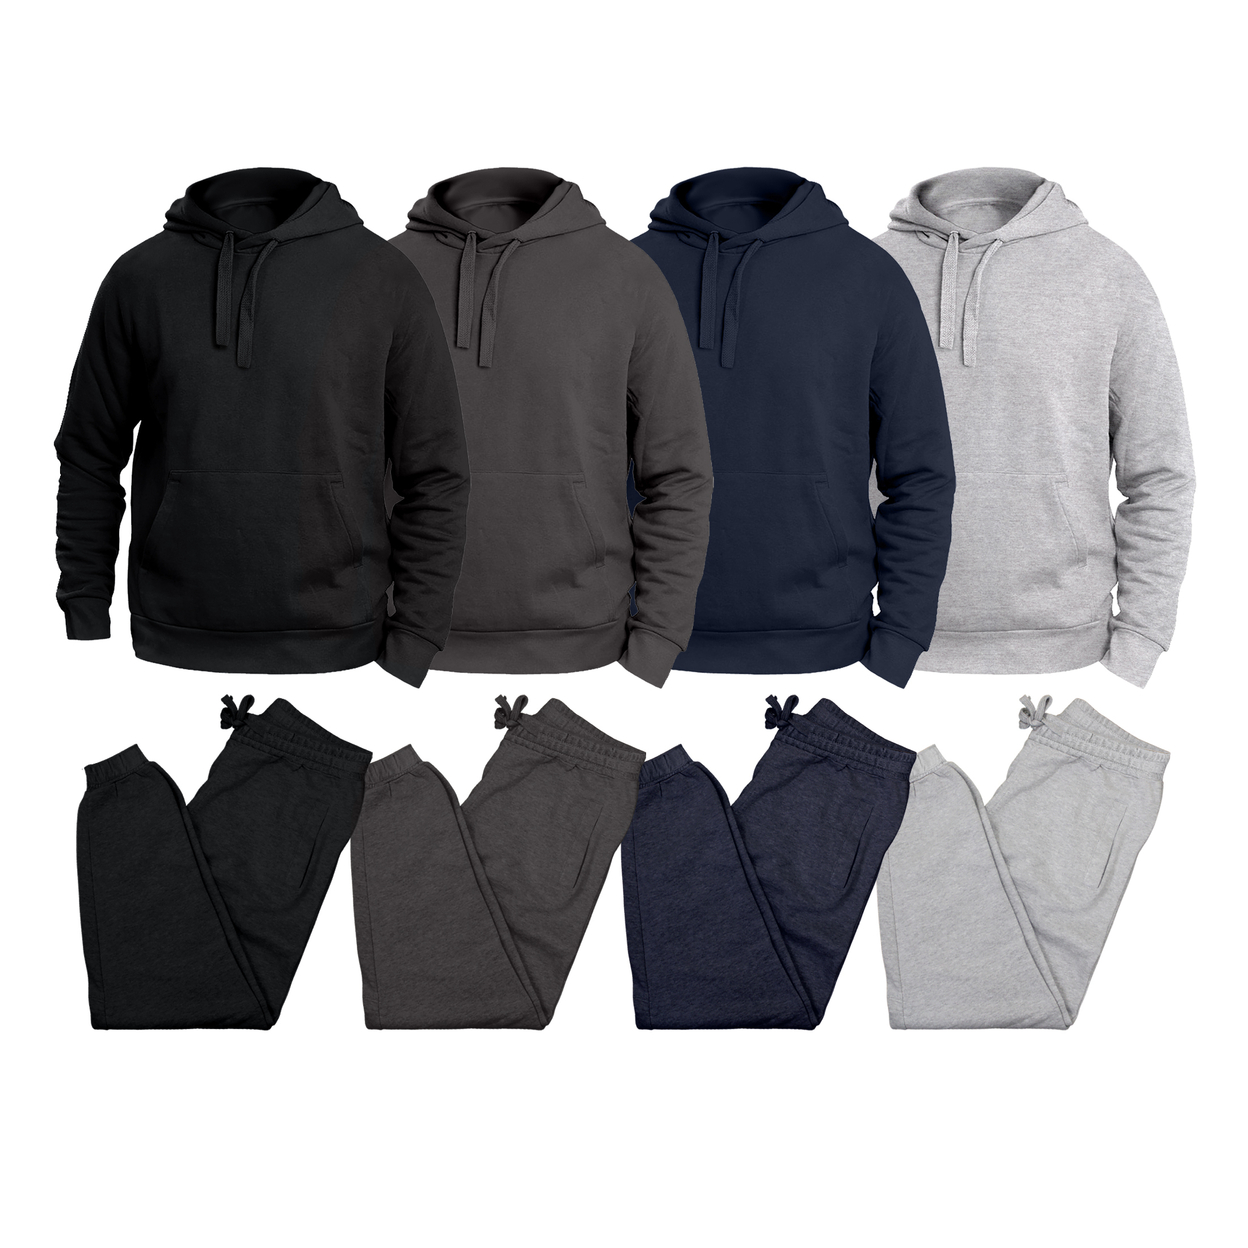 Multi-Pack: Big & Tall Men's Winter Warm Cozy Athletic Fleece Lined Multi-Pocket Cargo Sweatsuit - Grey, 2-pack, X-large